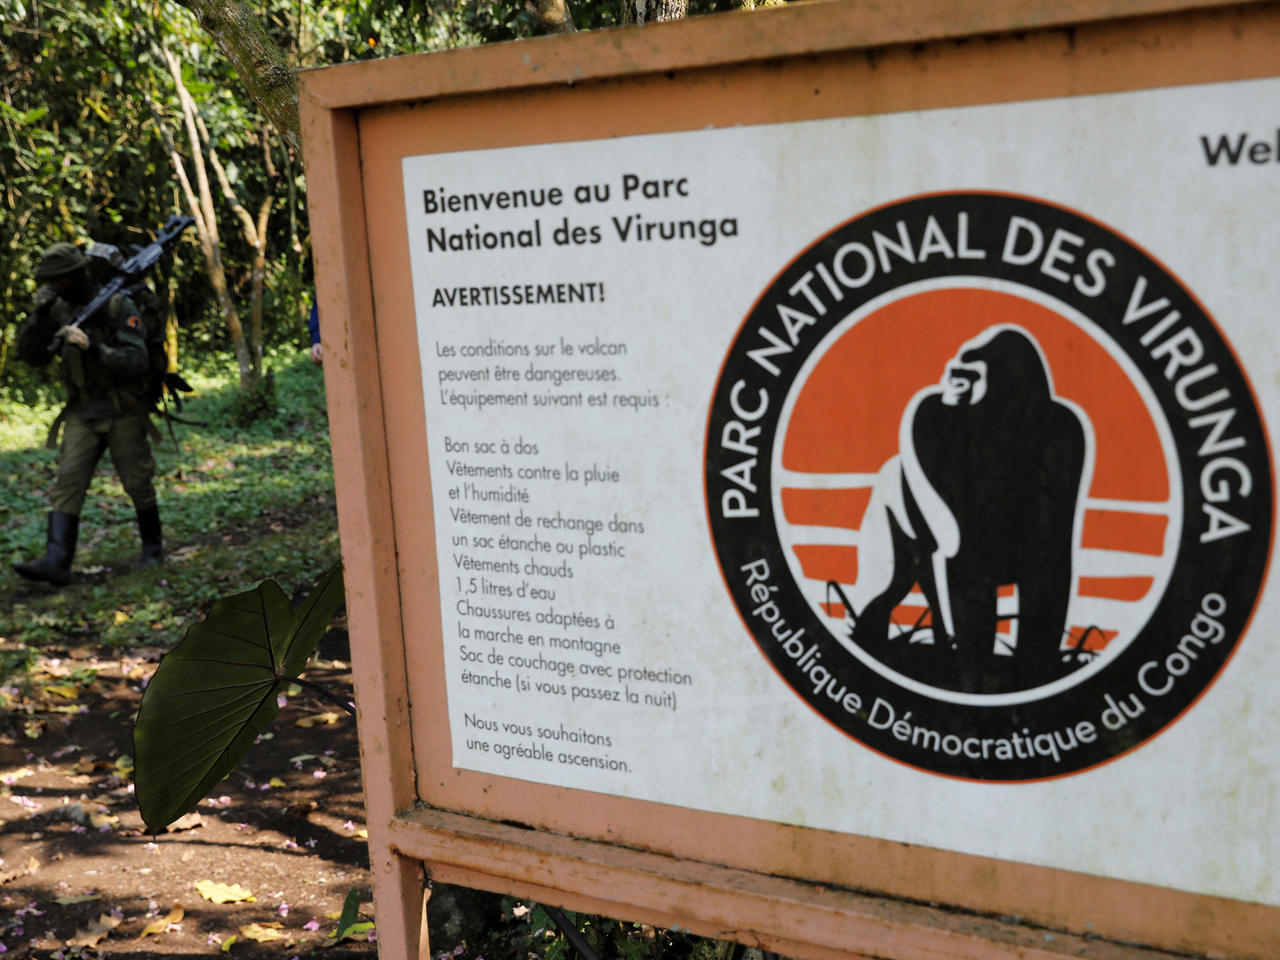 Parc des Virunga et Hopital general de reference de Mutwanga